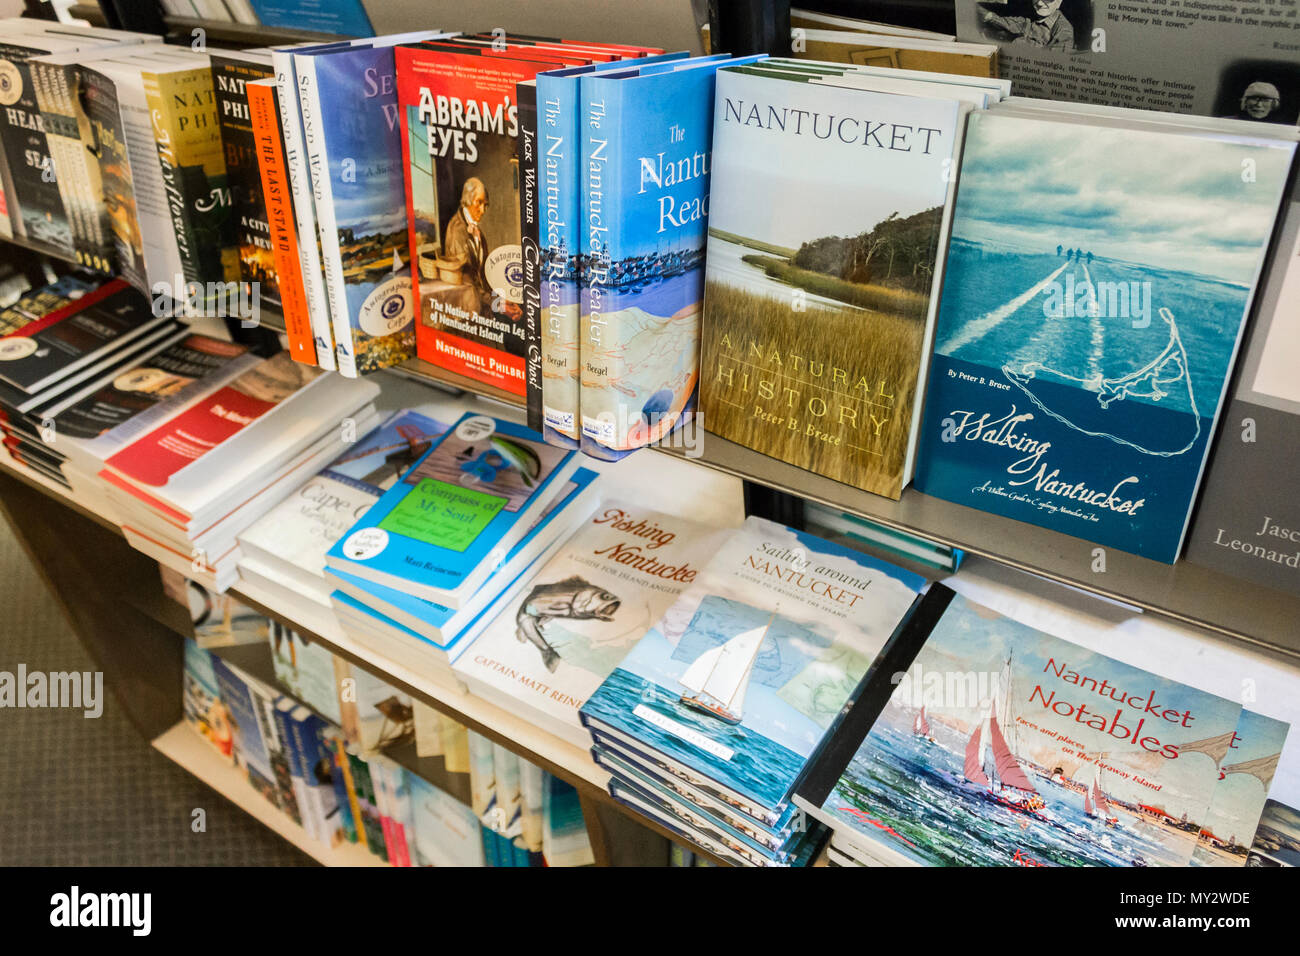 Books about Nantucket island in a shelf inside Mitchell's Book Corner, a bookshop in Nantucket town, Massachusetts Stock Photo